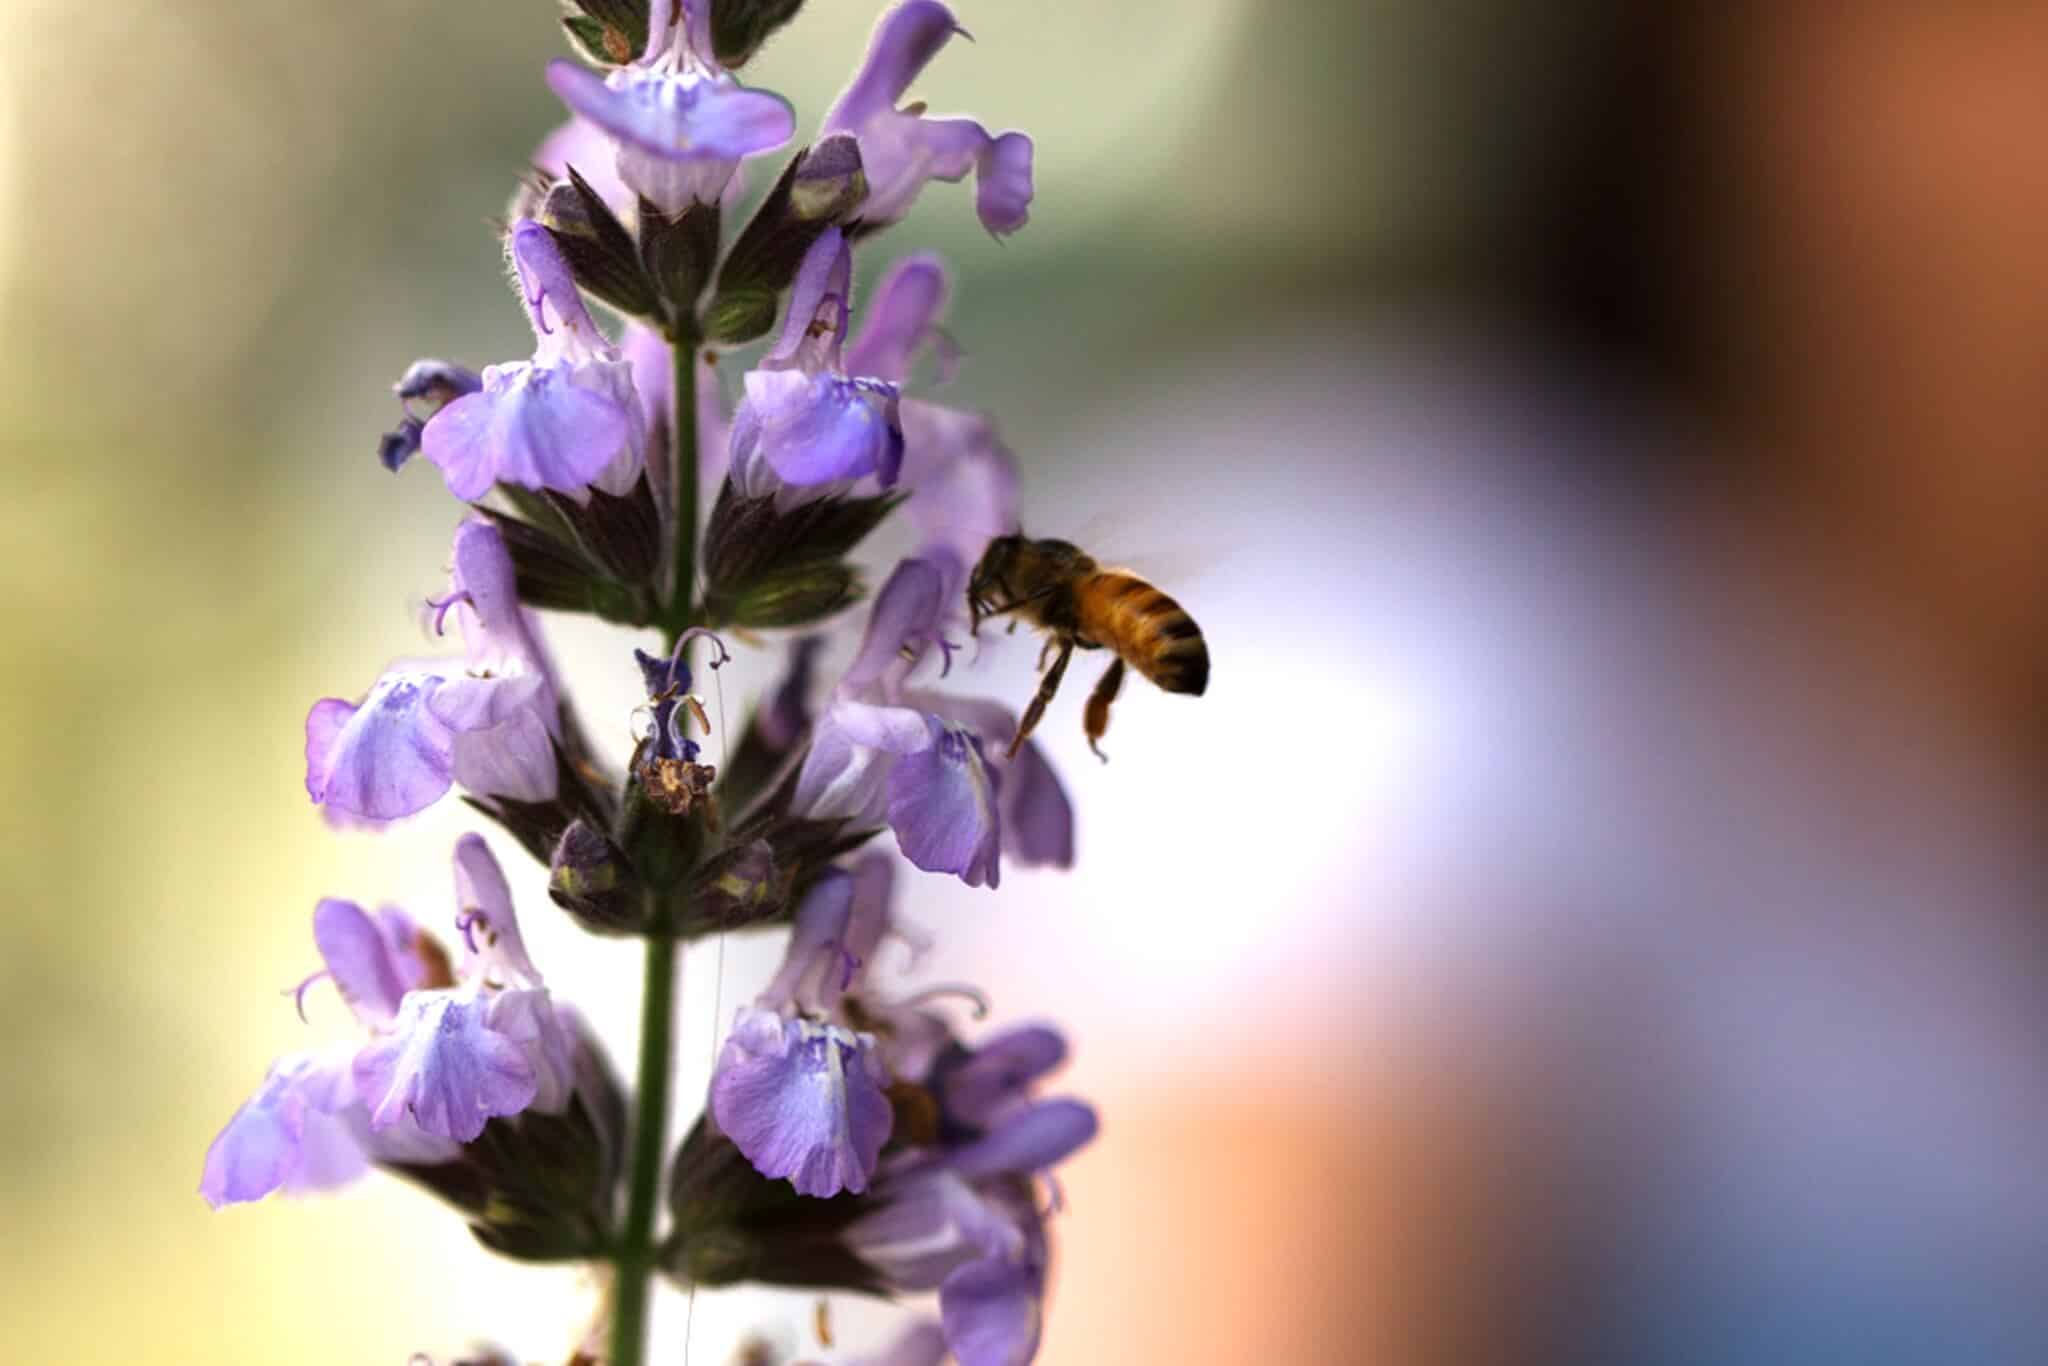 Bee on blue flowers. Photography by Zafir Nir